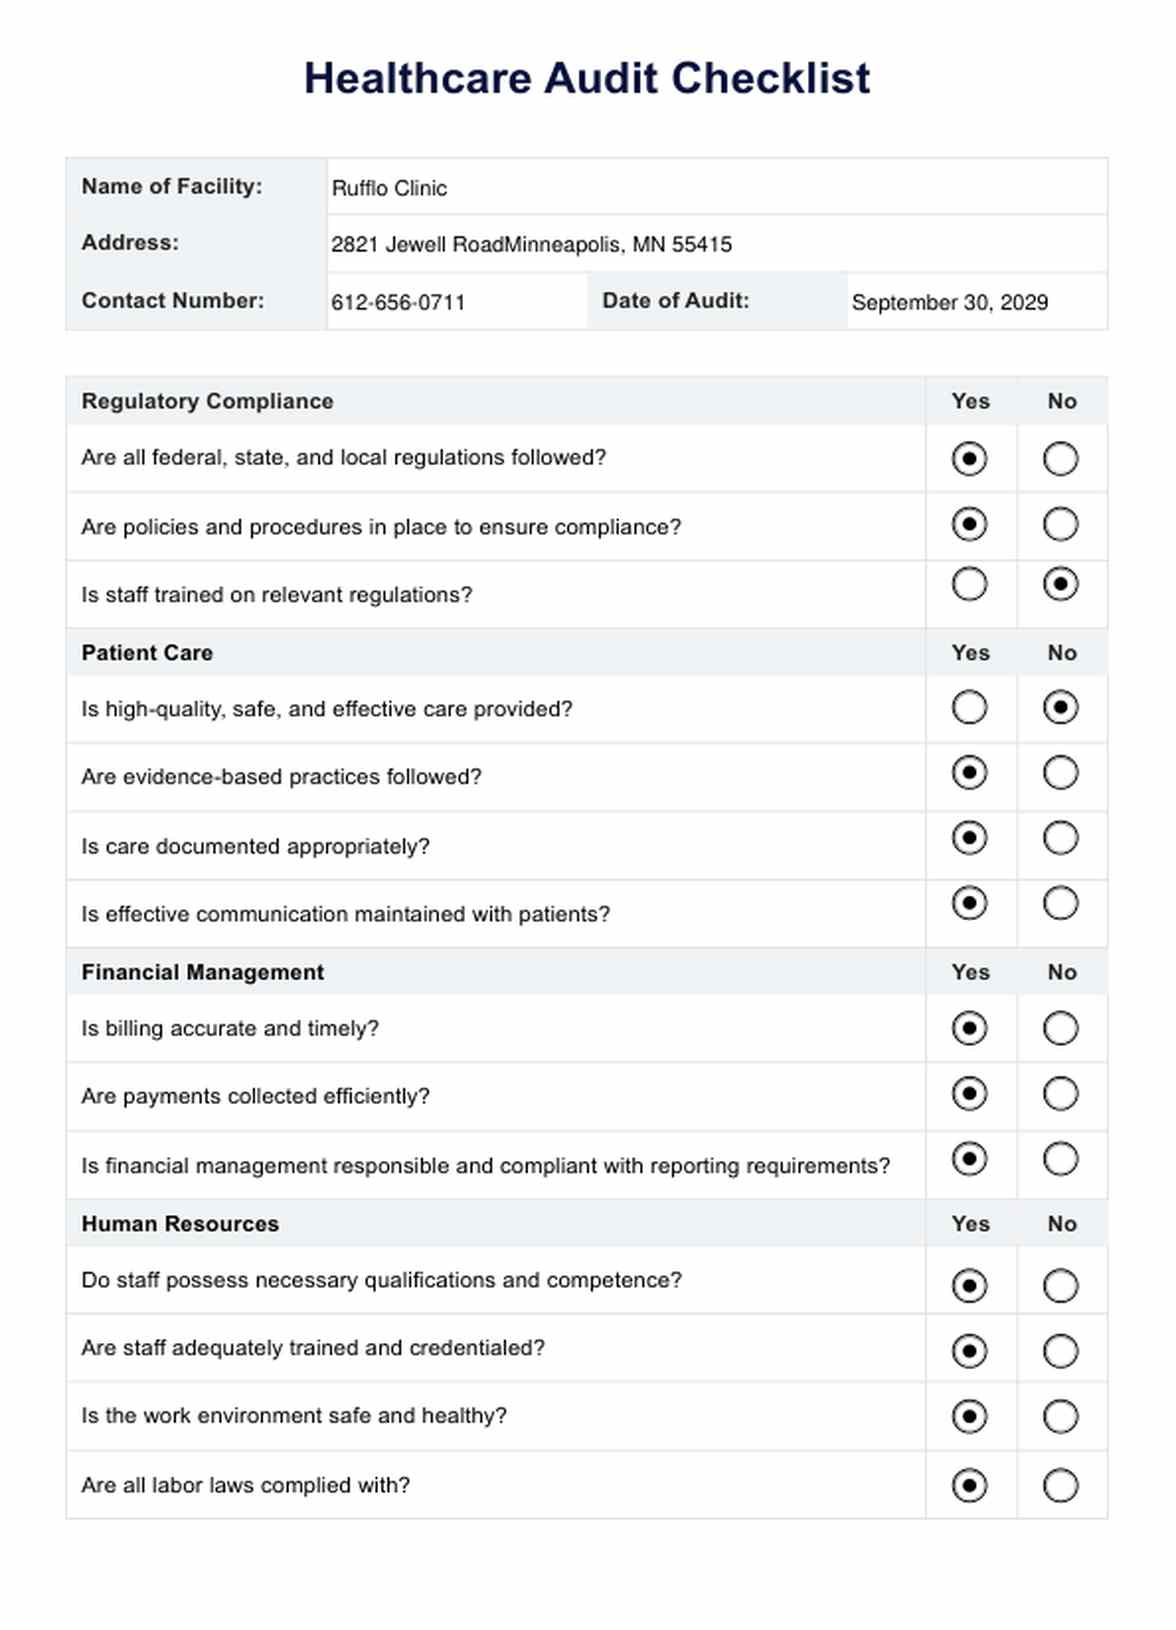 Healthcare Audit Checklist PDF Example